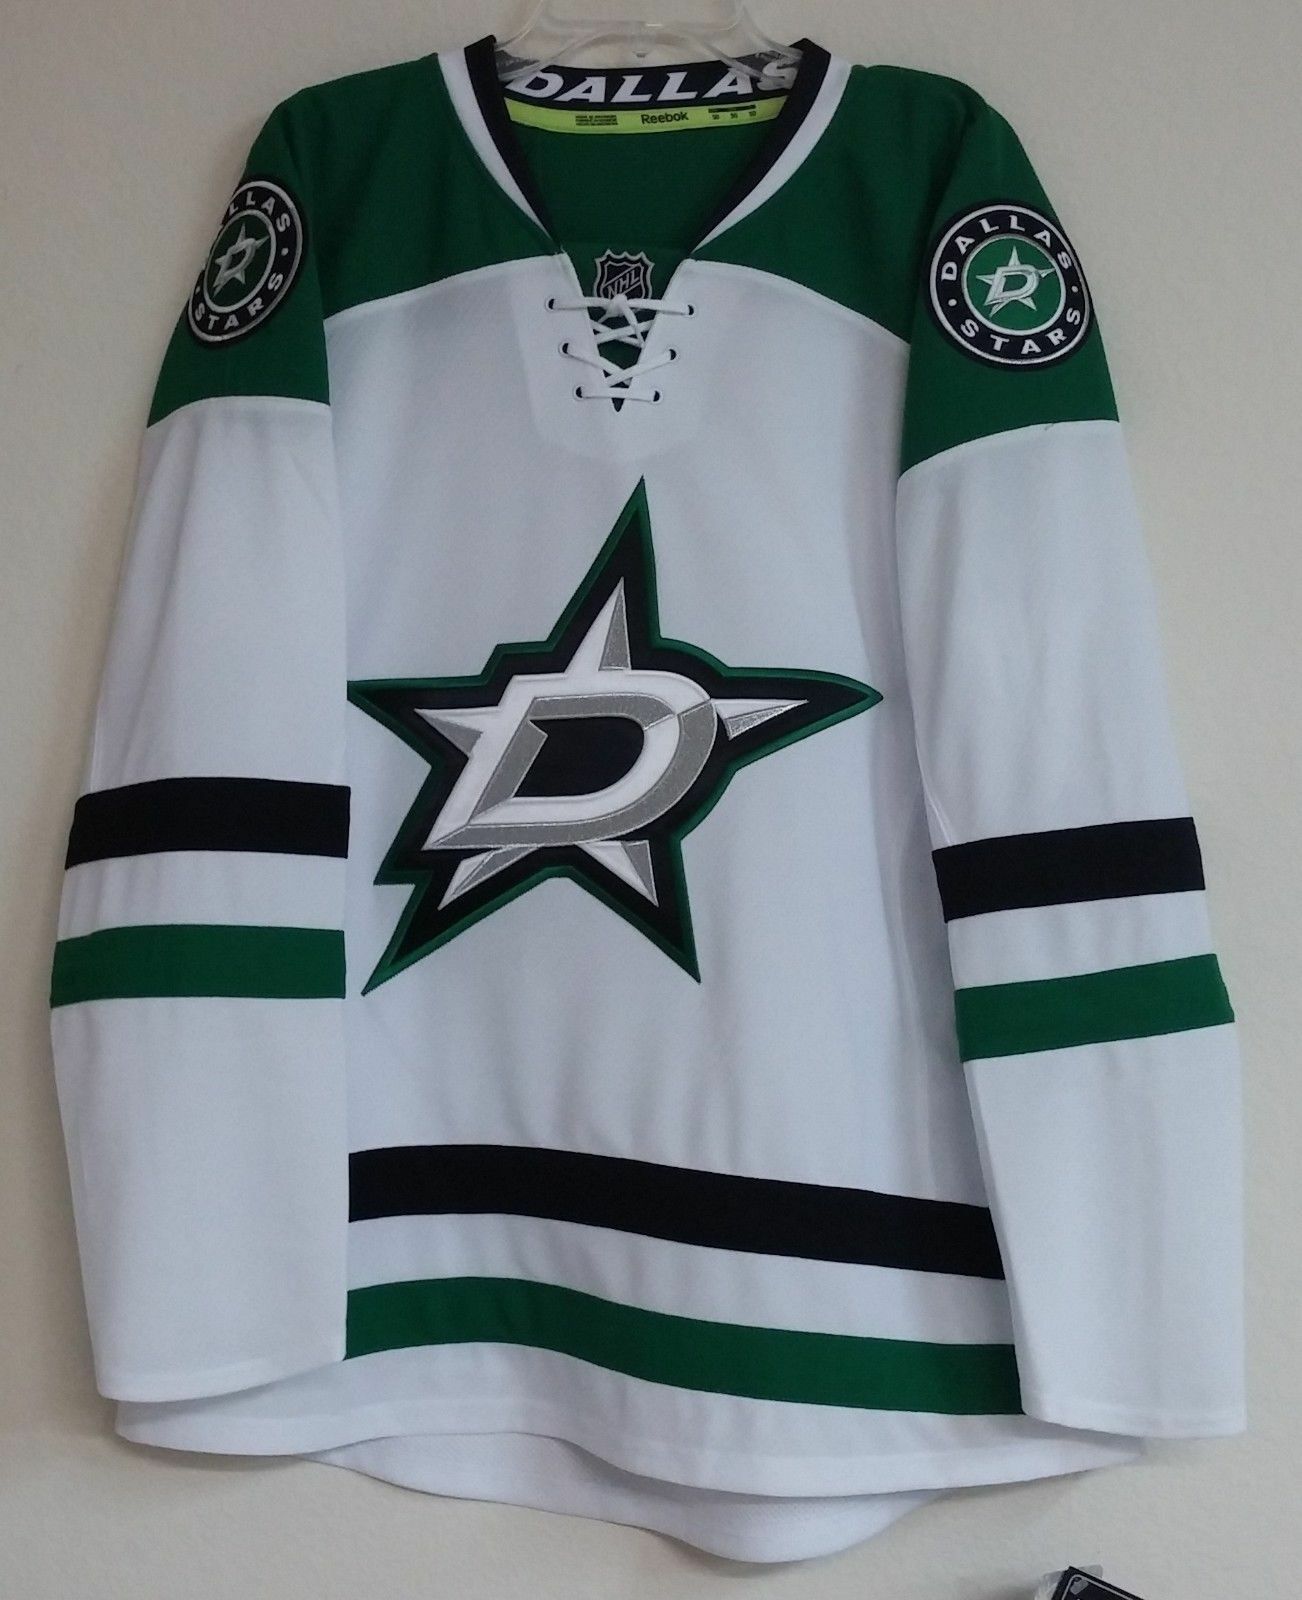 DALLAS STARS reebok NHL authentic EDGE 1.0 hockey jersey away-white size 50 NEW Image 1